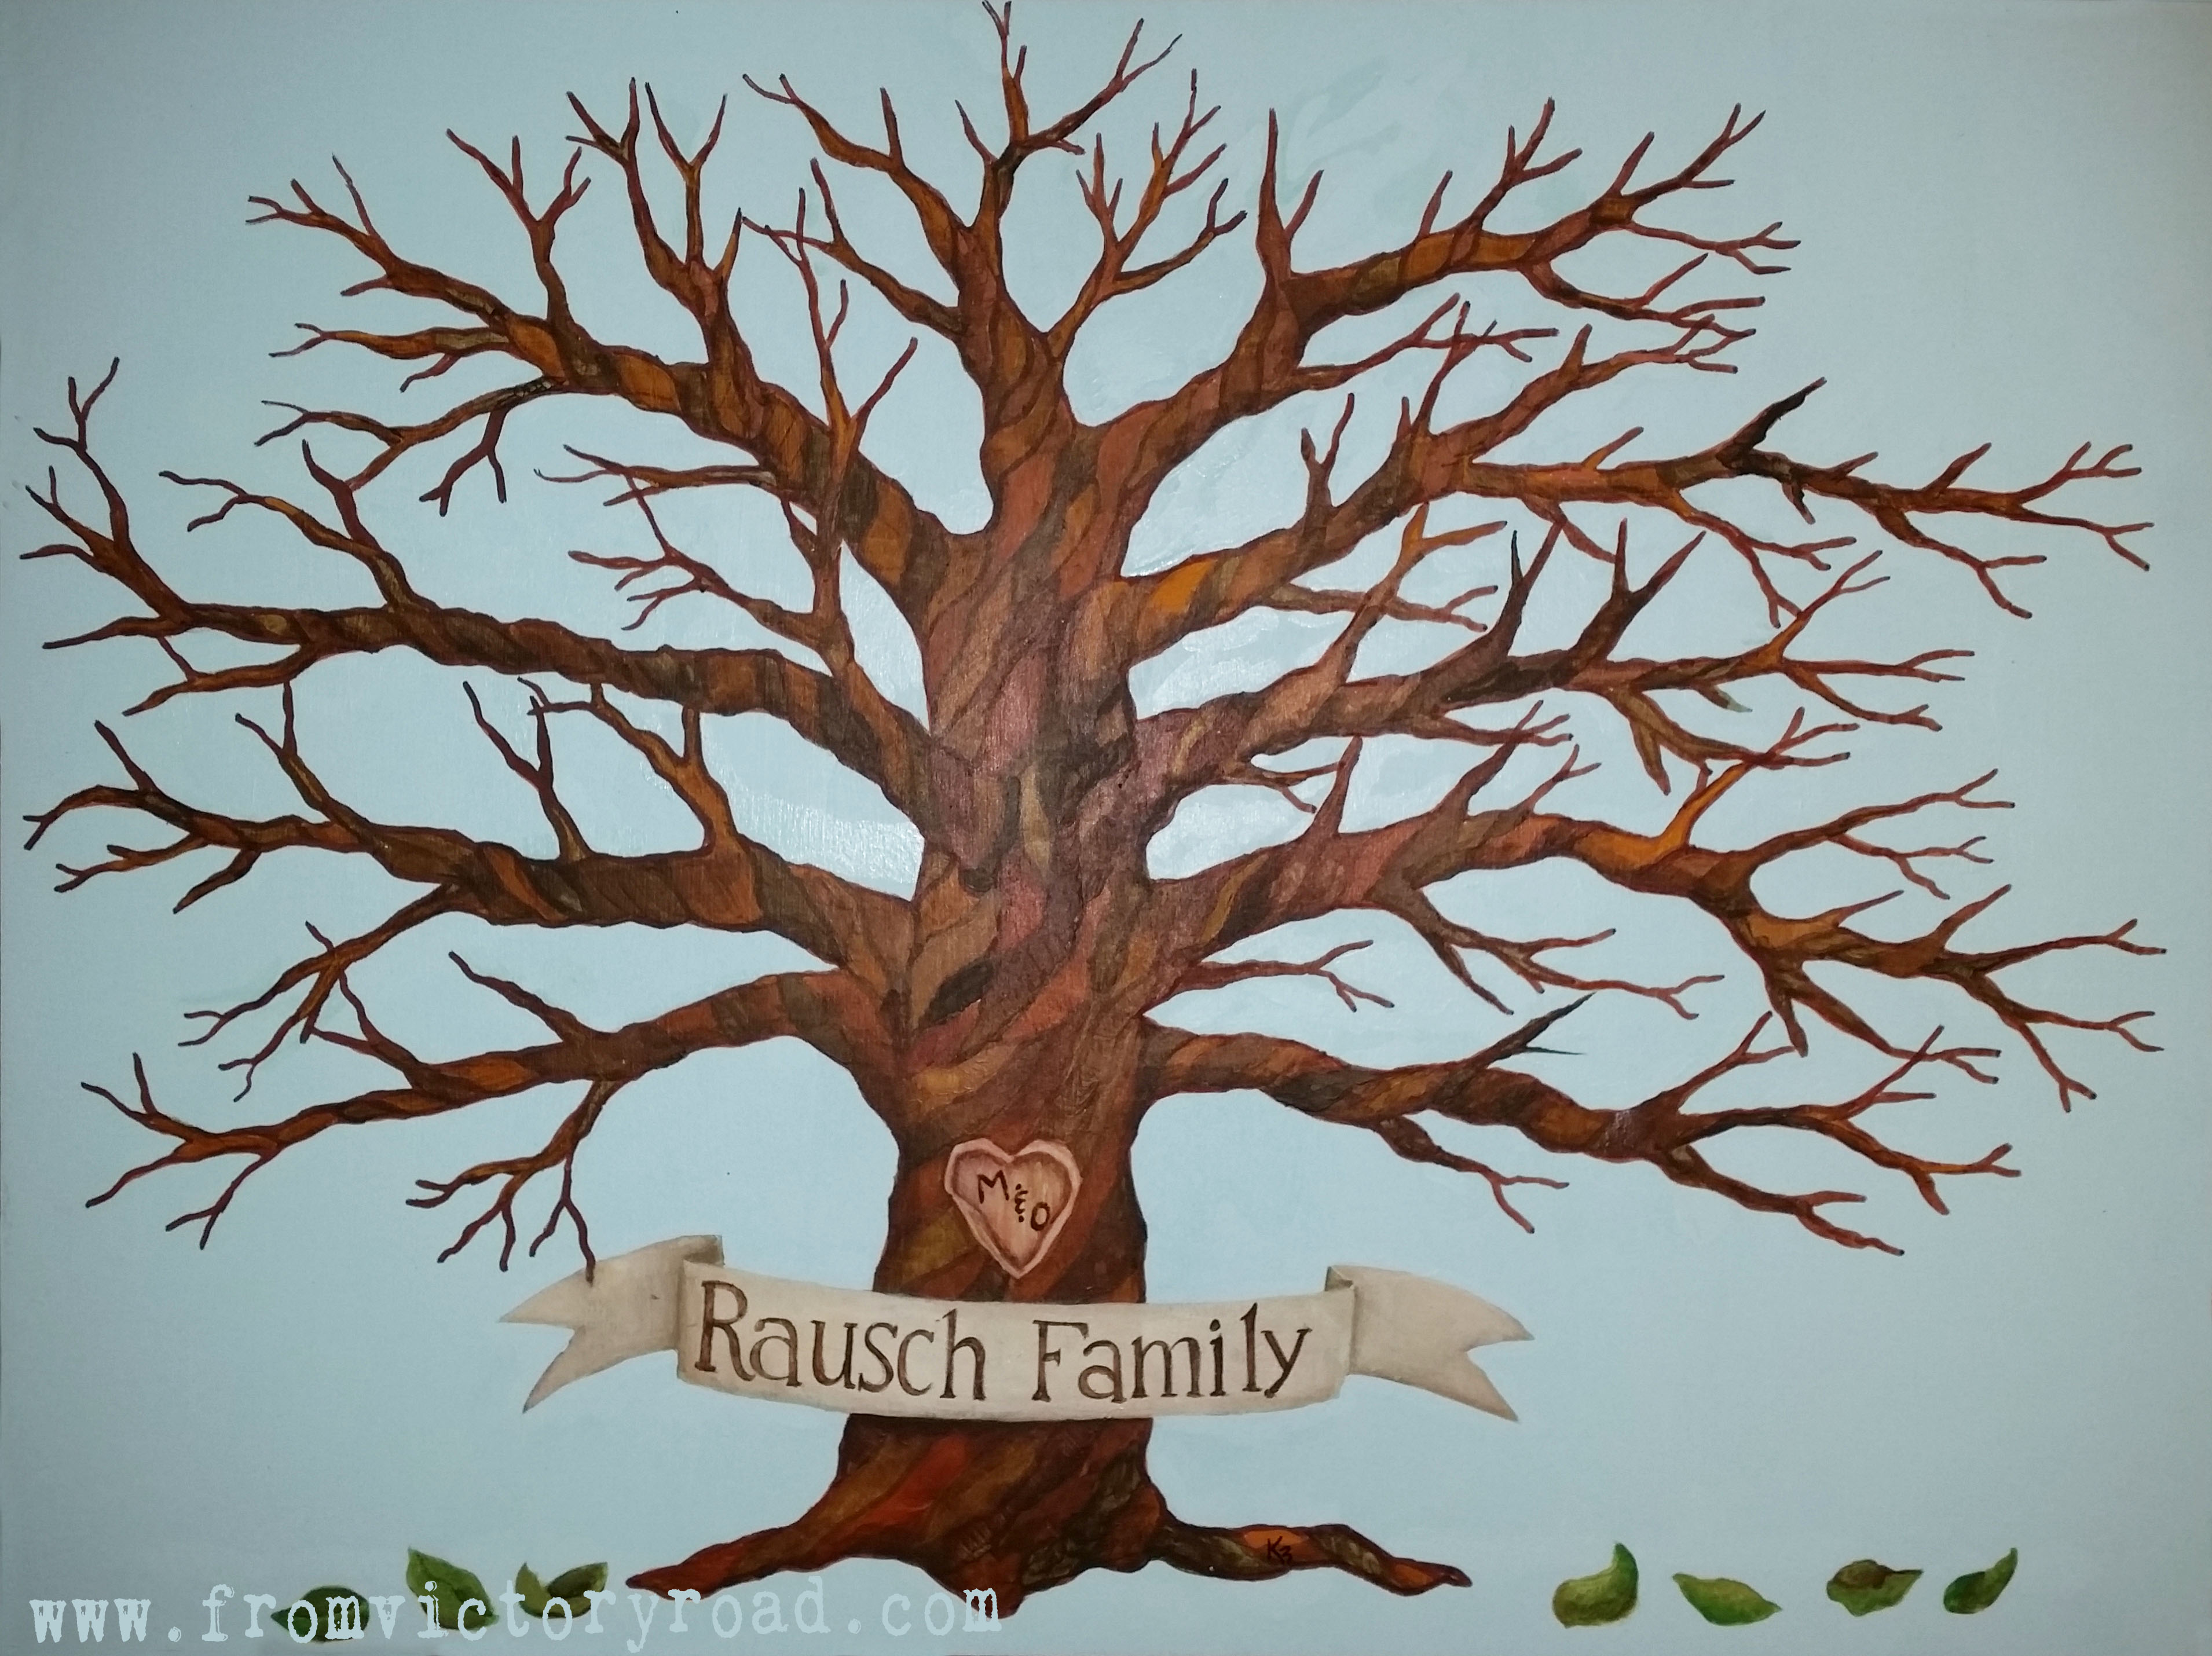 family tree watermark